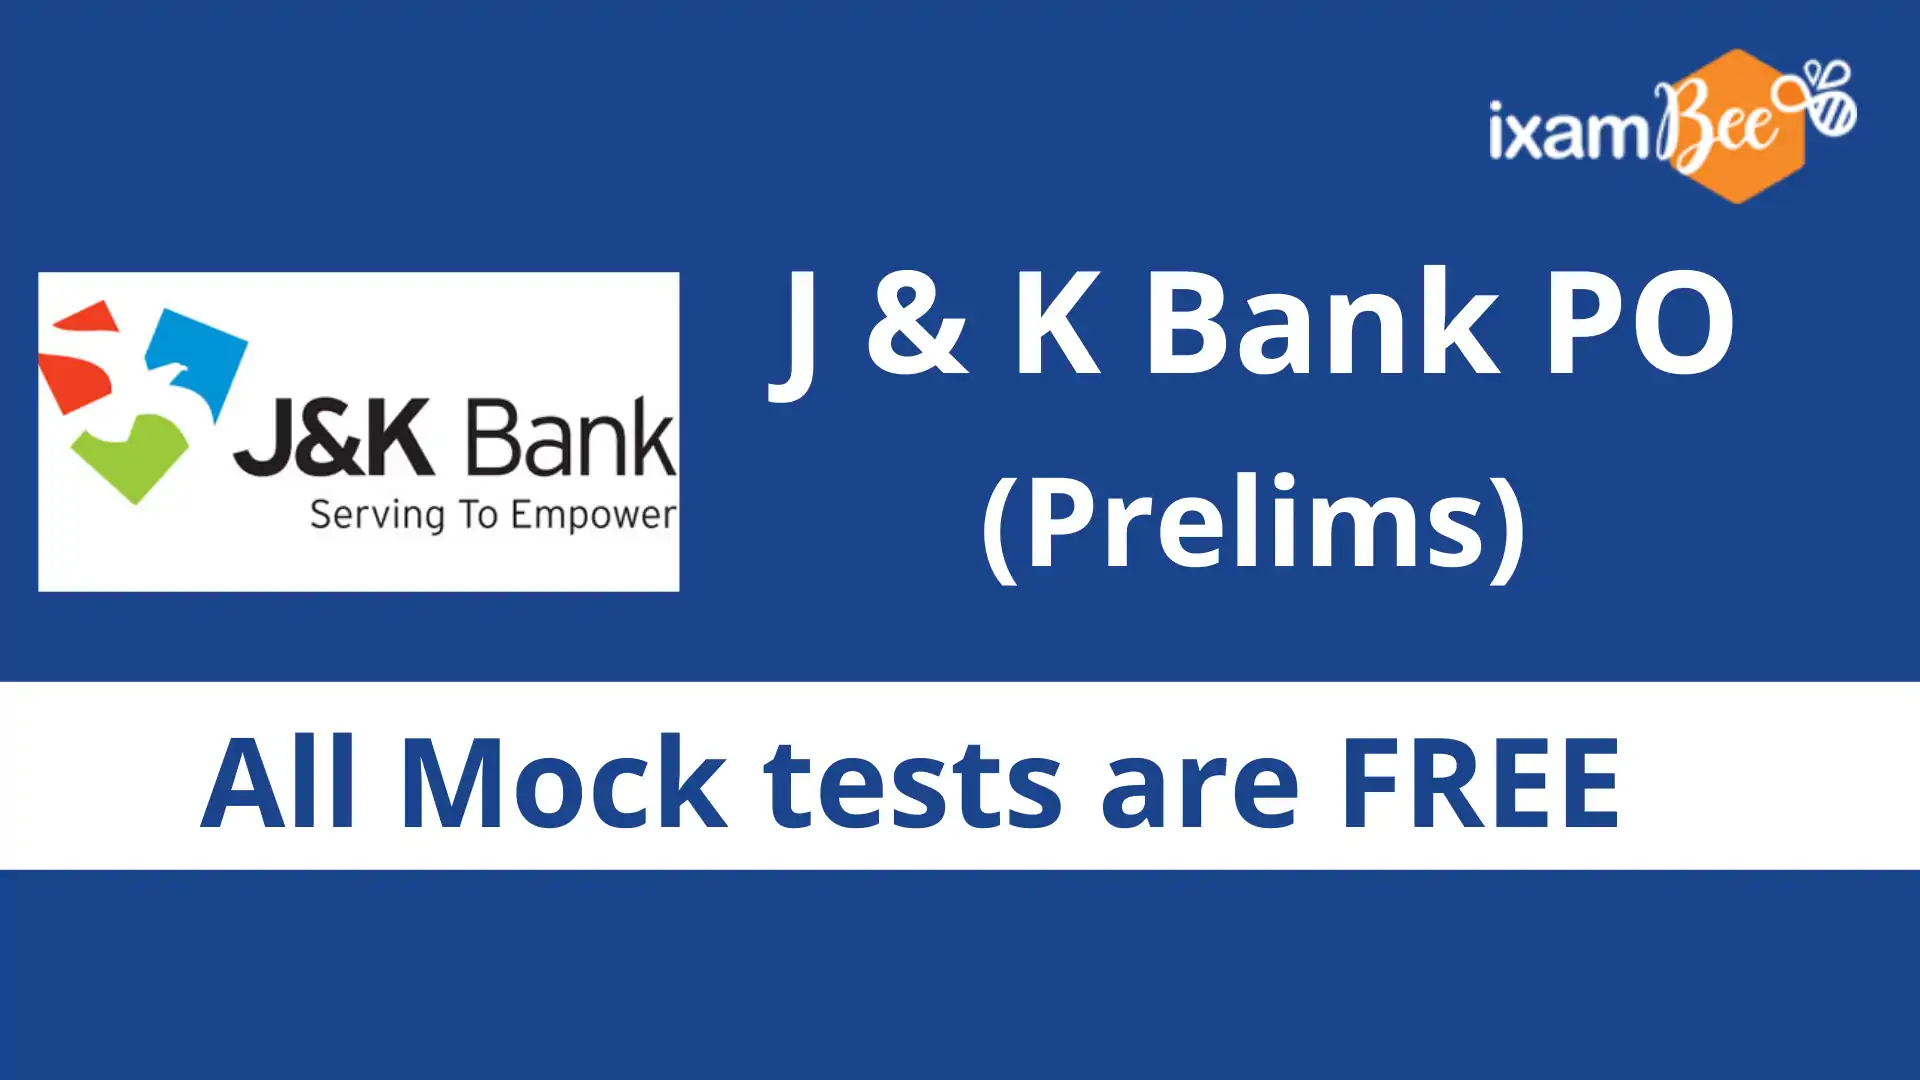 J&K Bank PO prelims online course